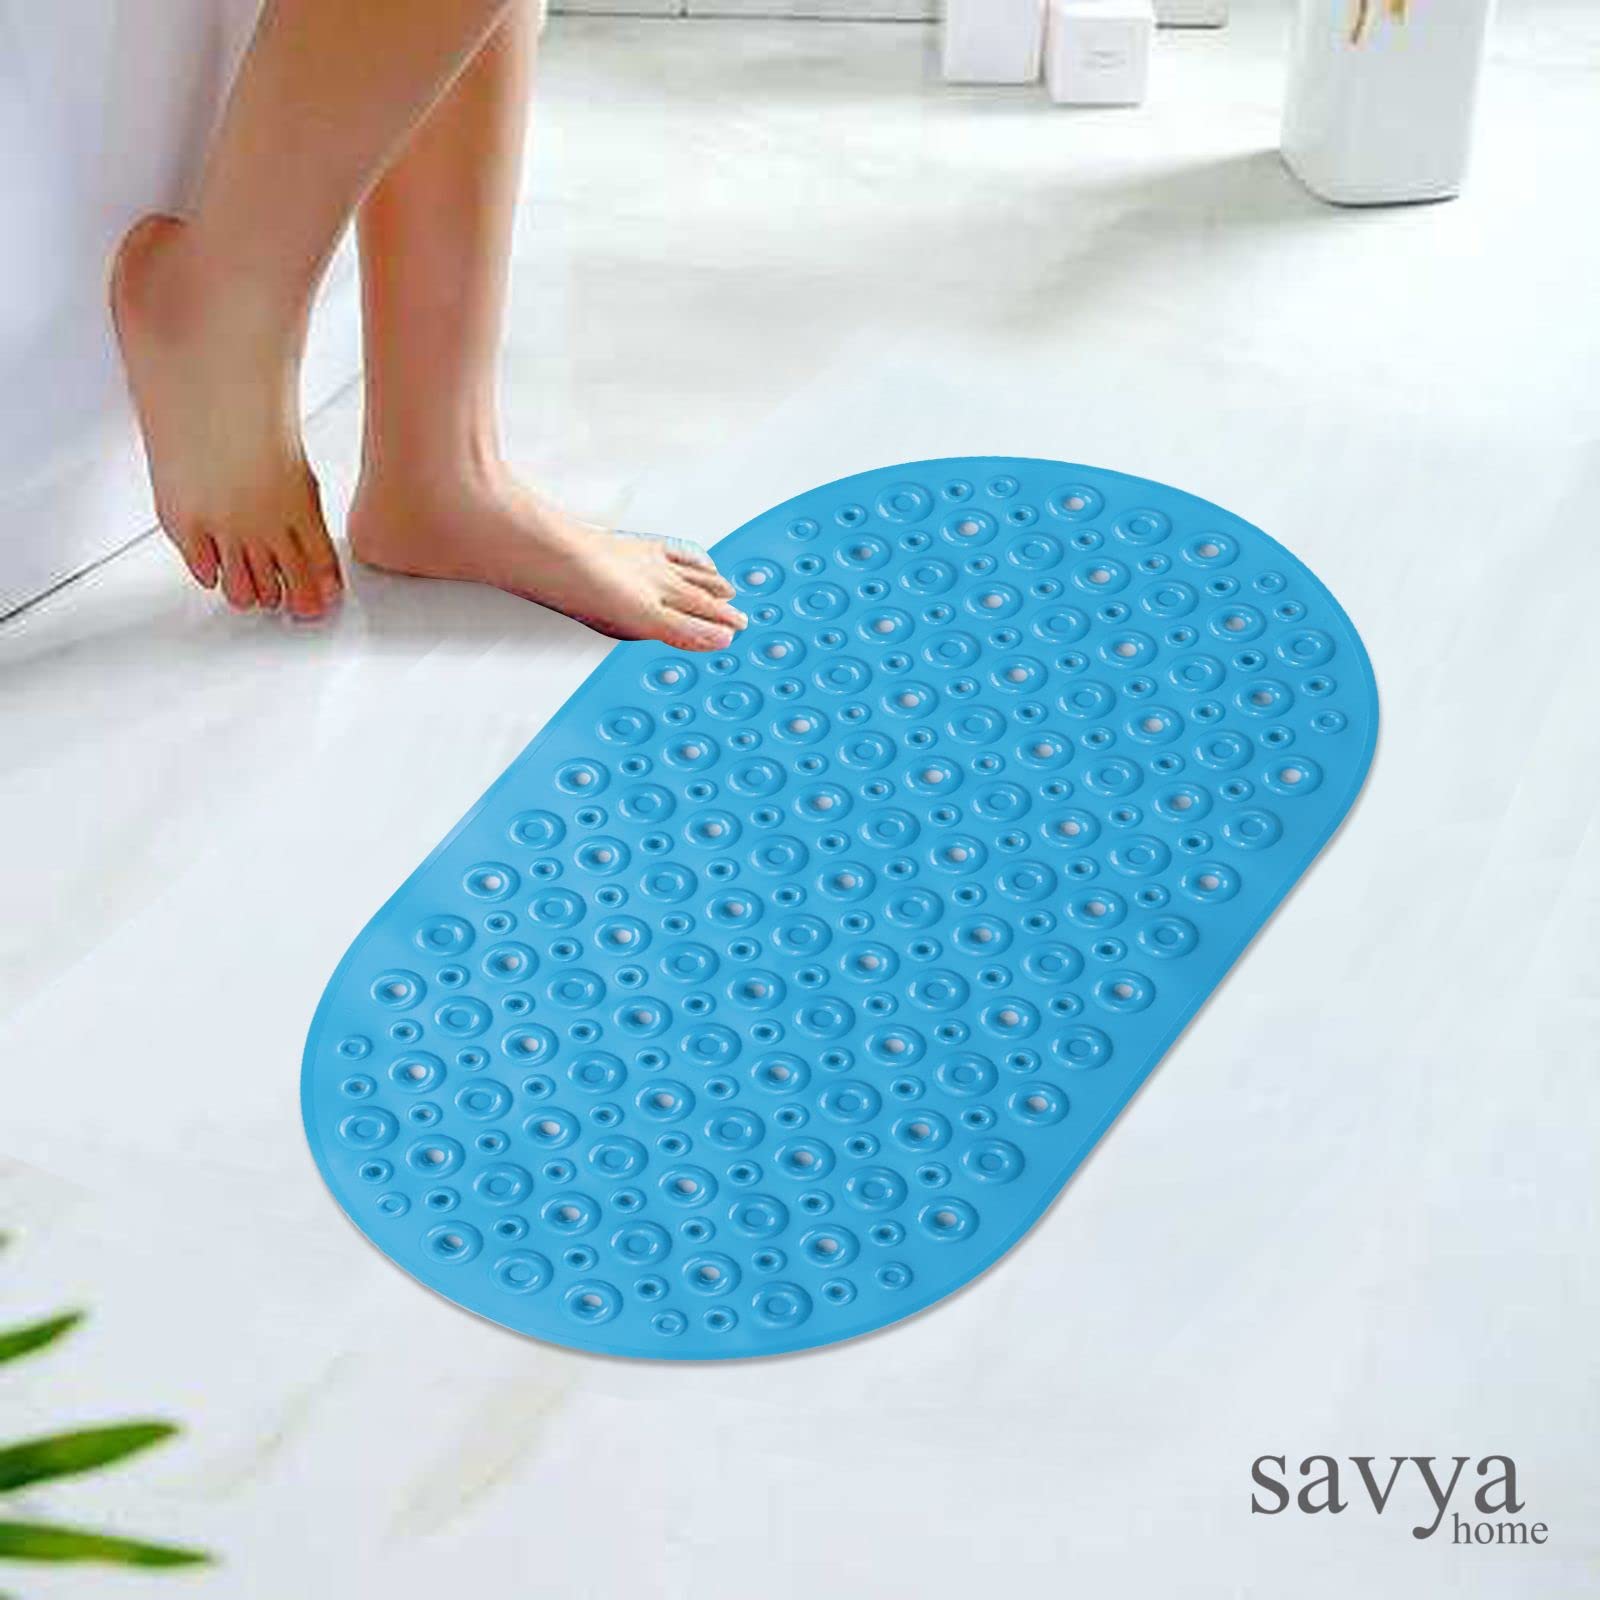 SAVYA HOME - Blue Nonslip Soft Rubber Bath Mat, Rain Mat for Bathtub and Shower, Anti Slip, Anti Bacterial, Machine Washable PVC Bath Mat for Bathroom | Size : 65 x 36 cm